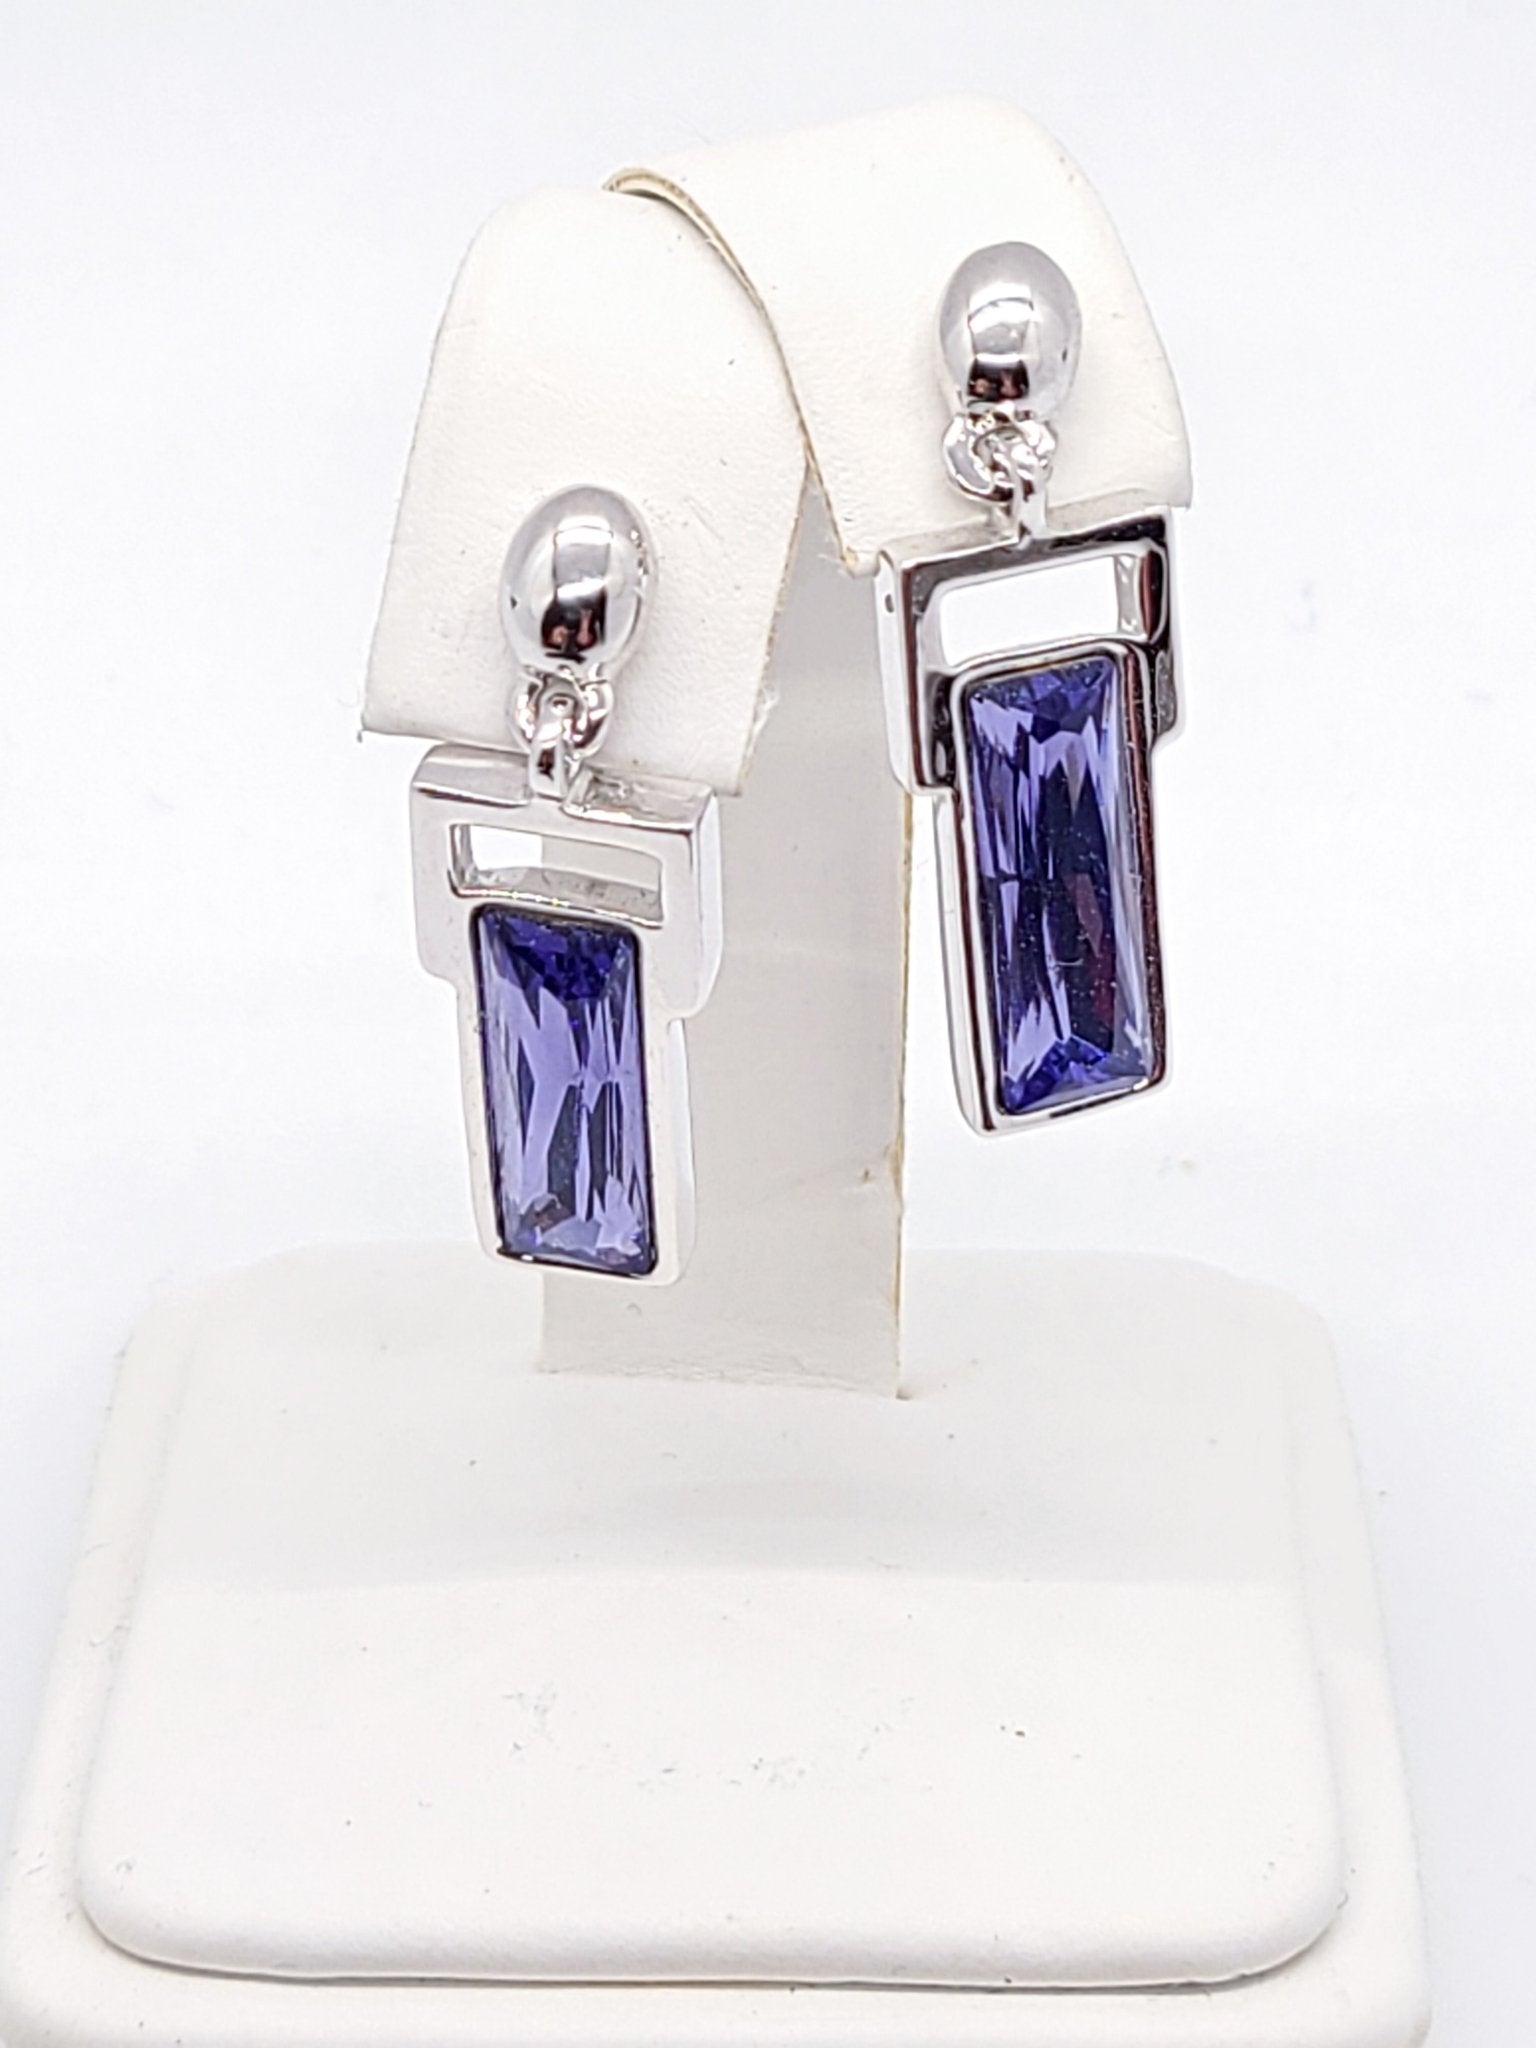 Lavender Stone Earrings